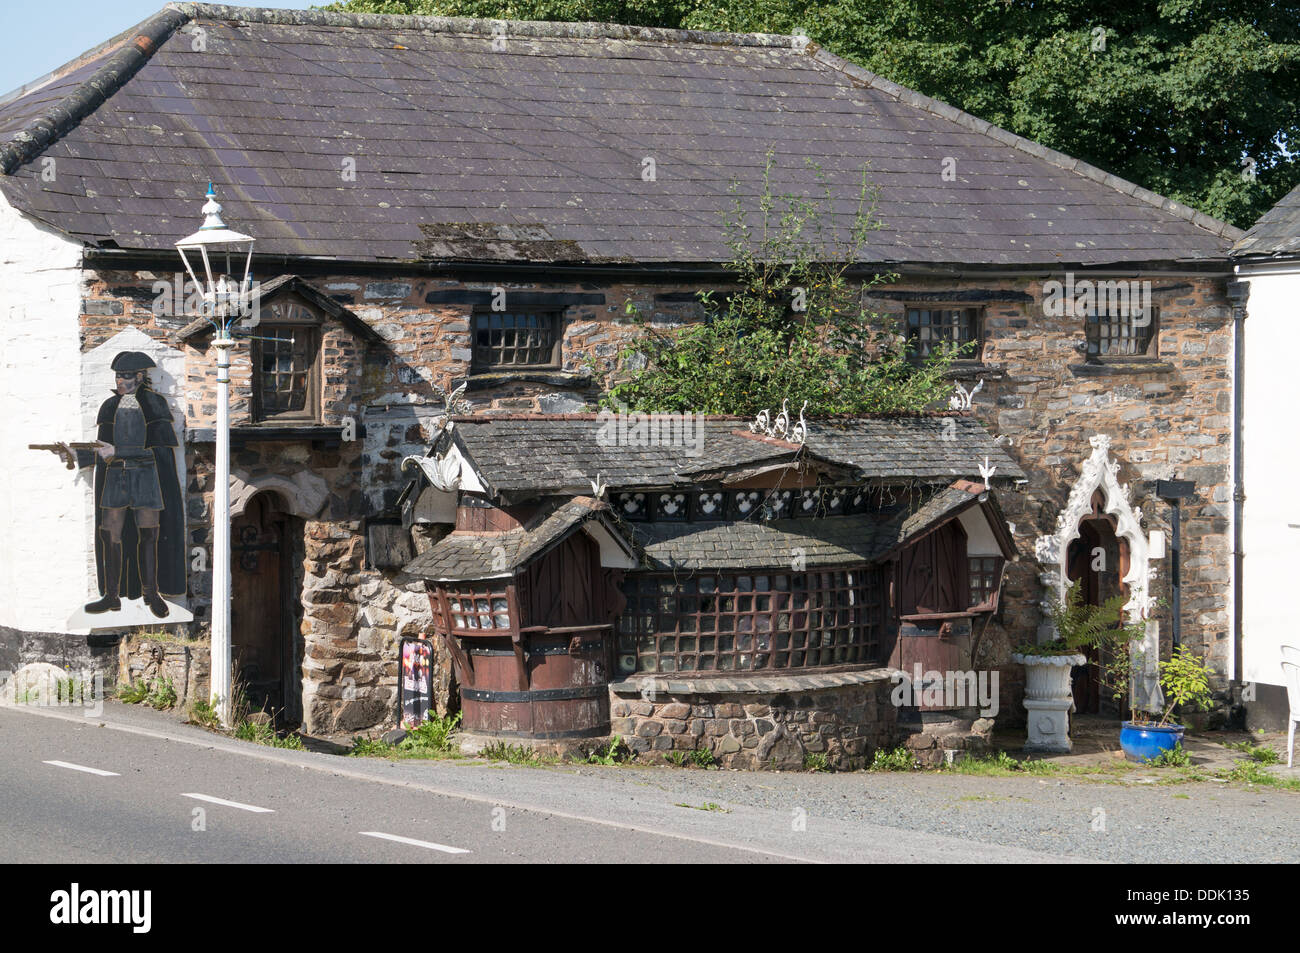 Le Highwayman Inn en Sourton, Devon, England, UK Banque D'Images